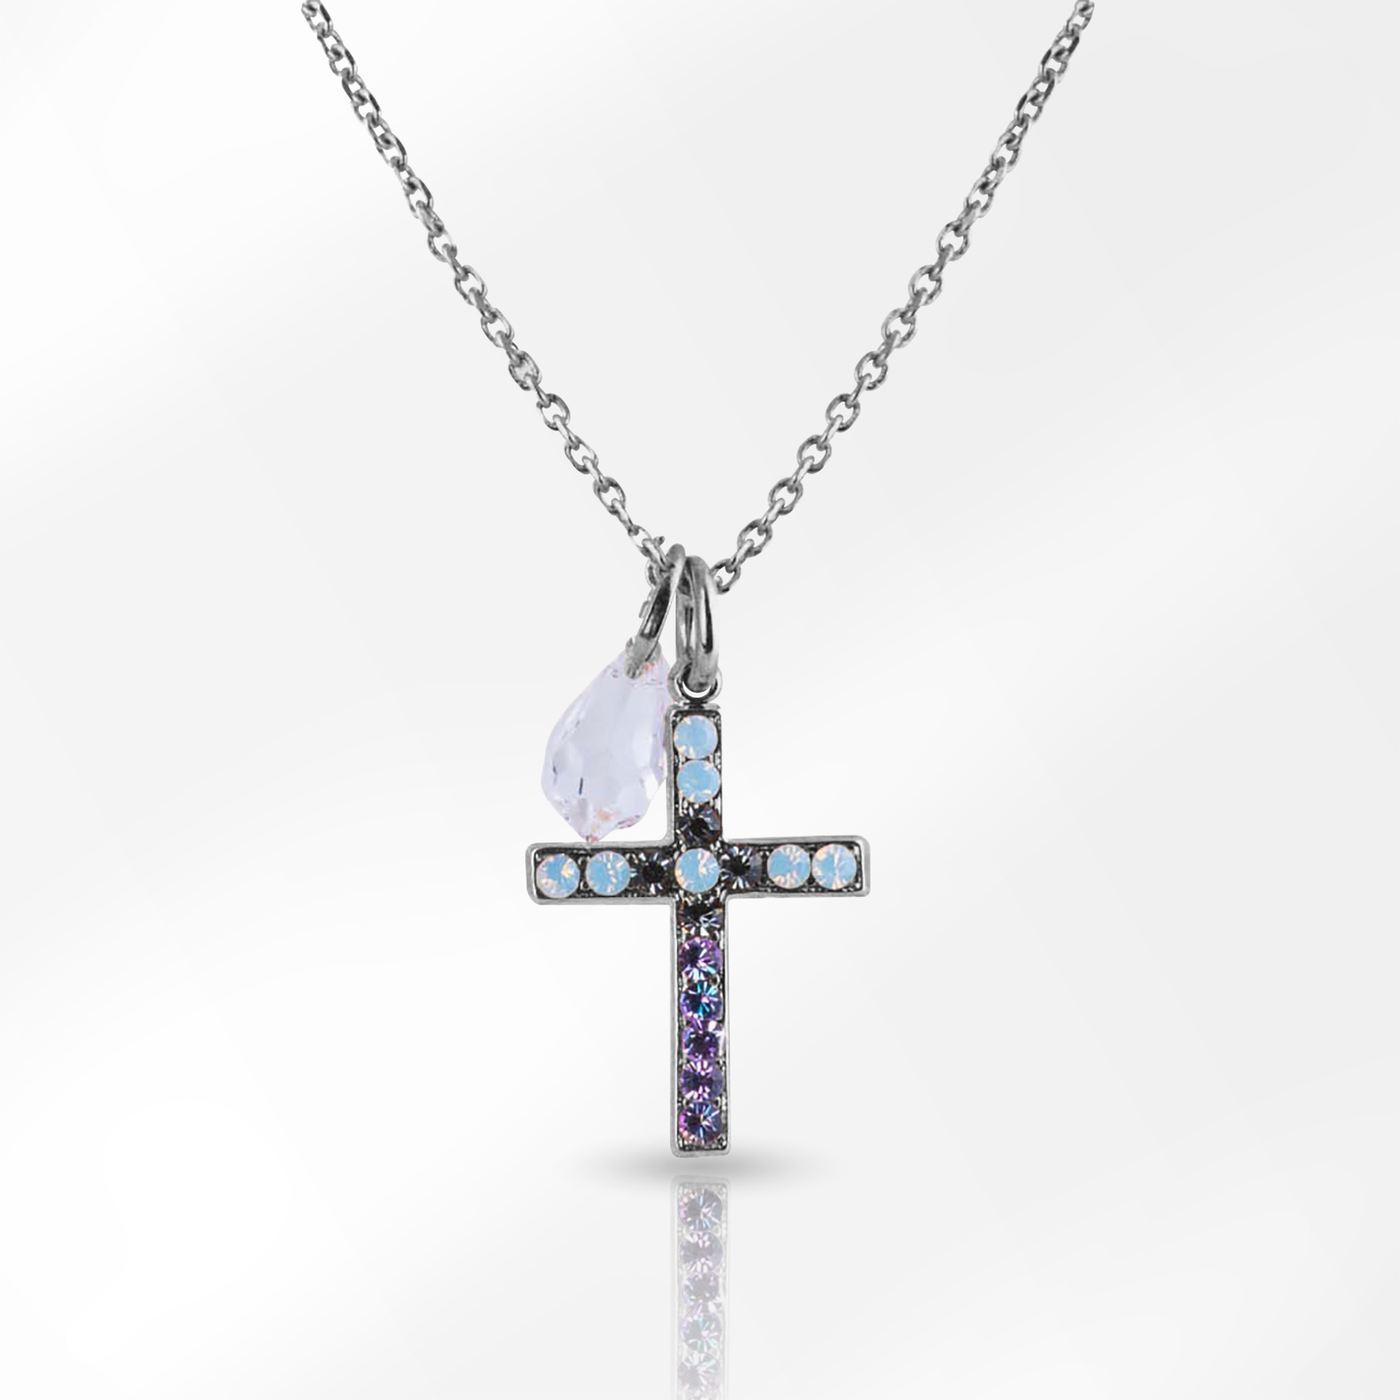 Petite Cross "Ice Queen" Pendant